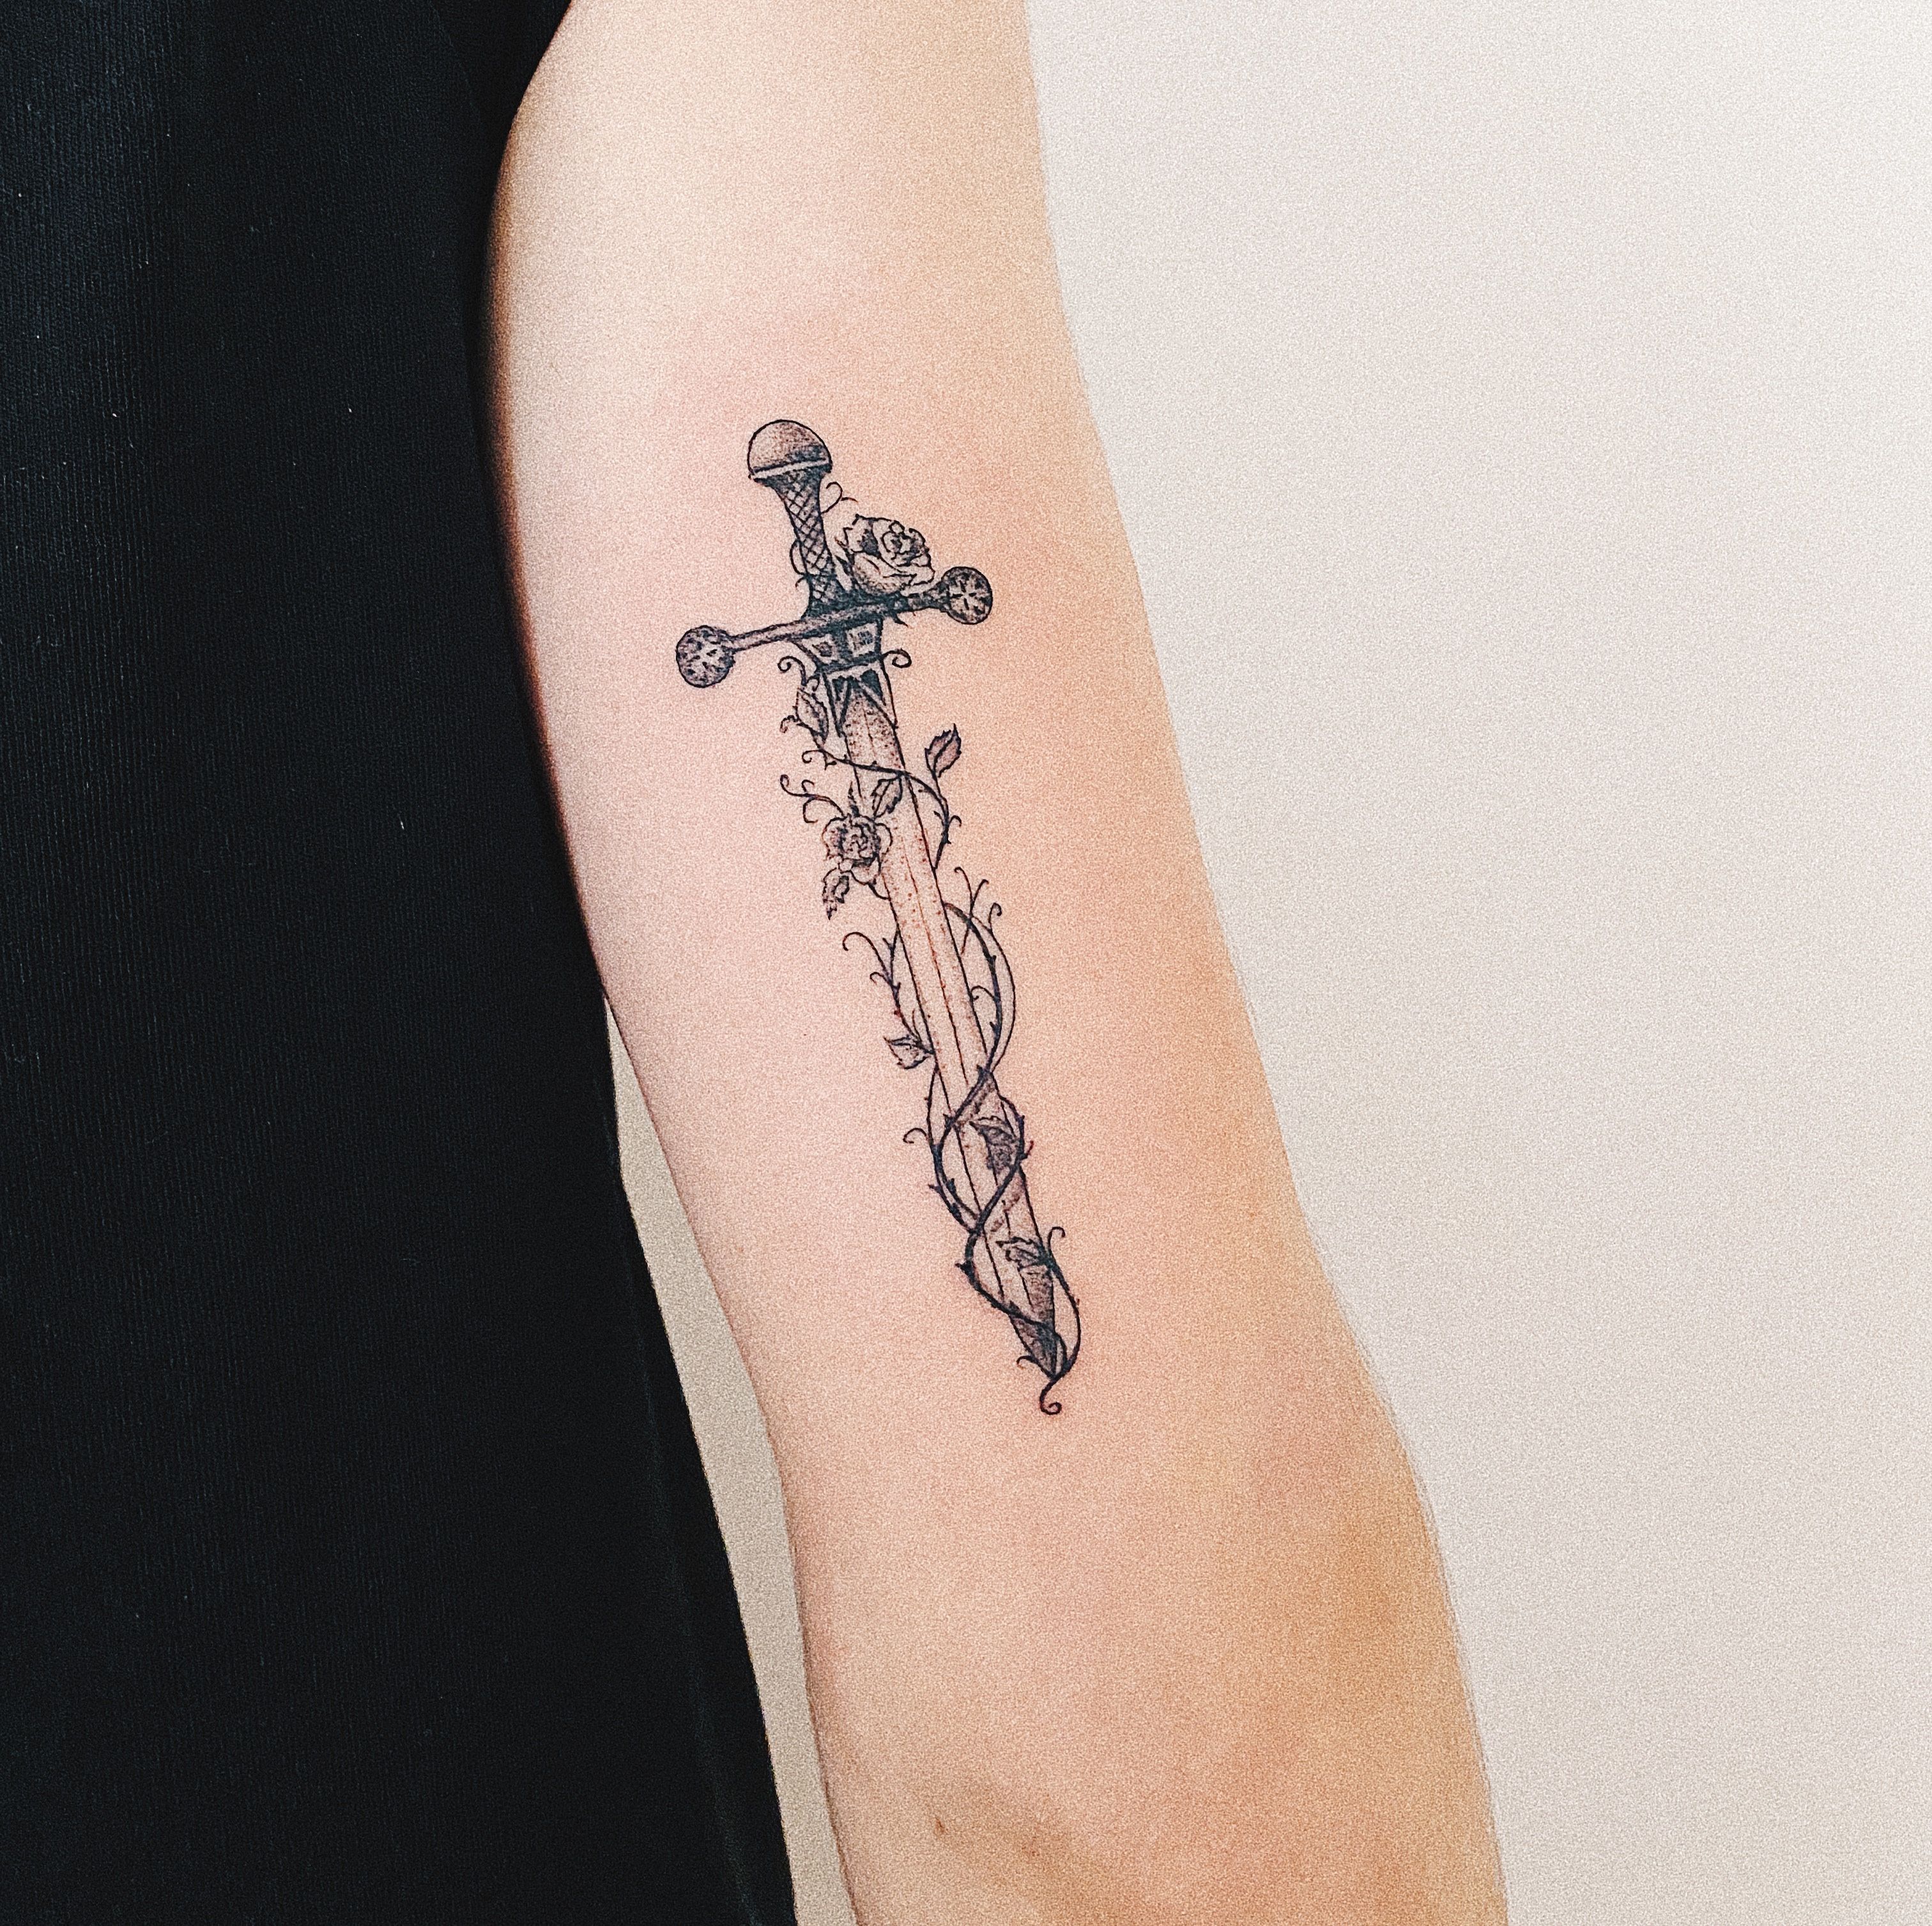 satisfiedwren6 Sword tattoo design minimalist